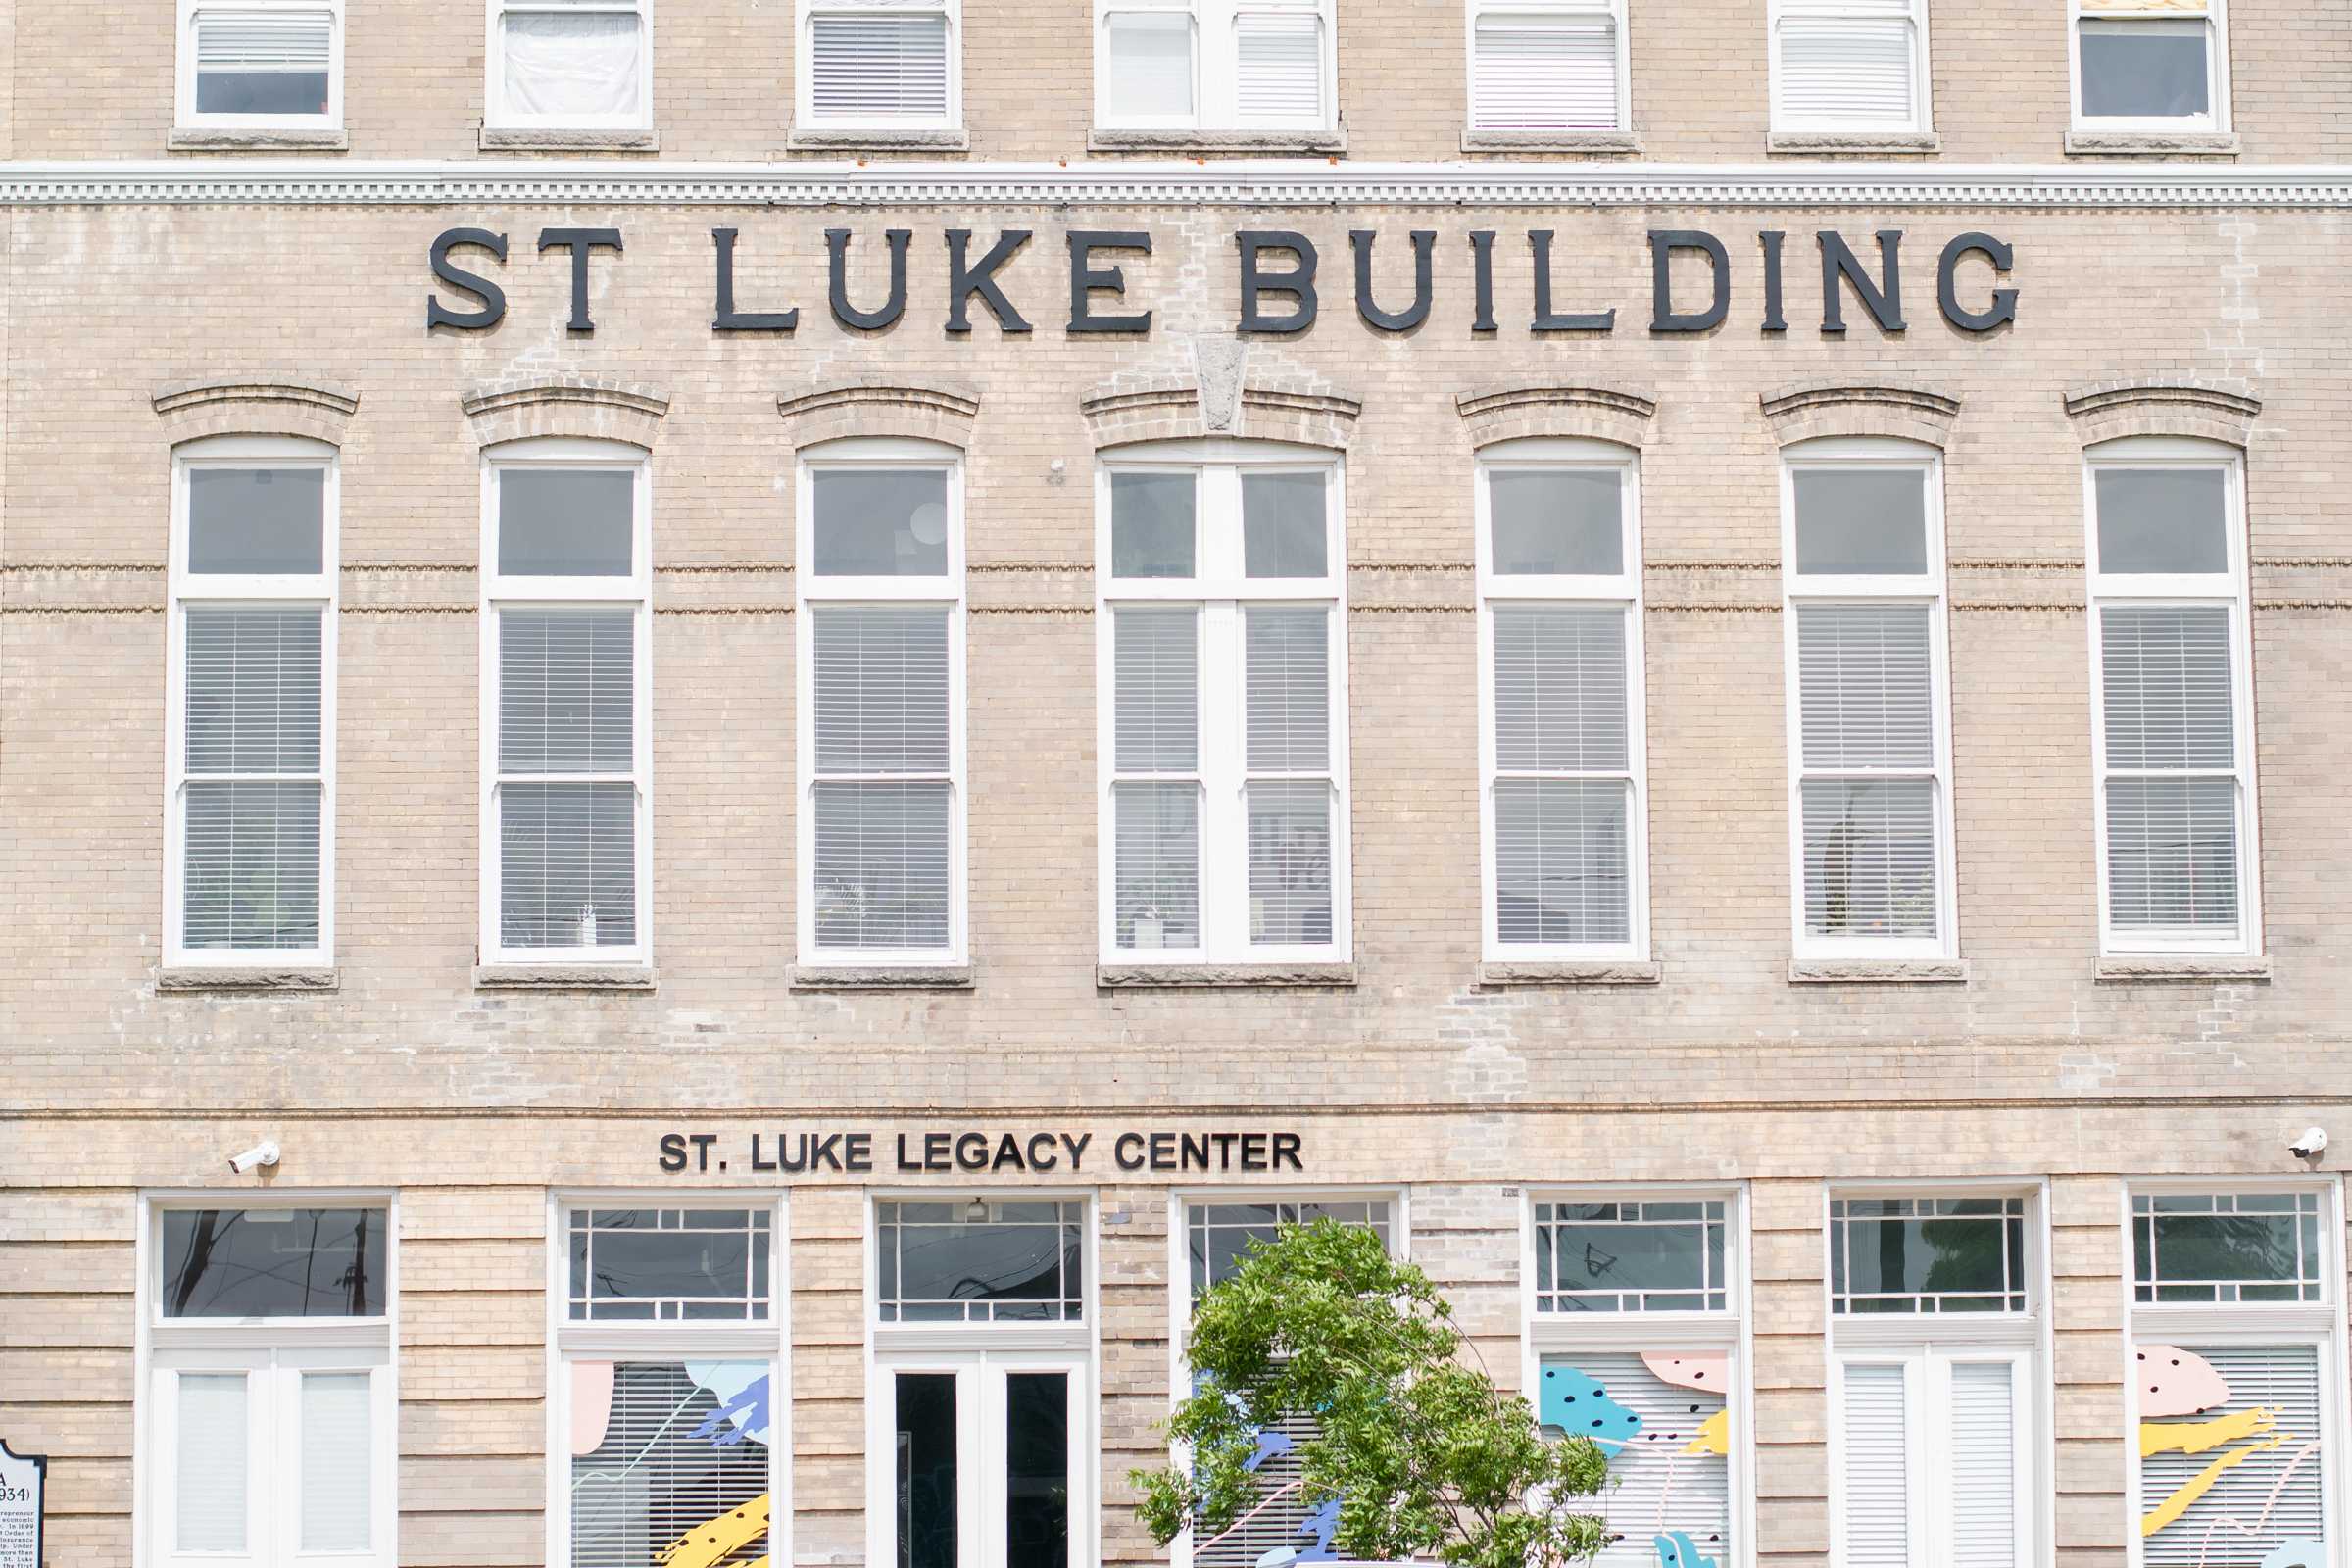 Photograph of St. Luke Building